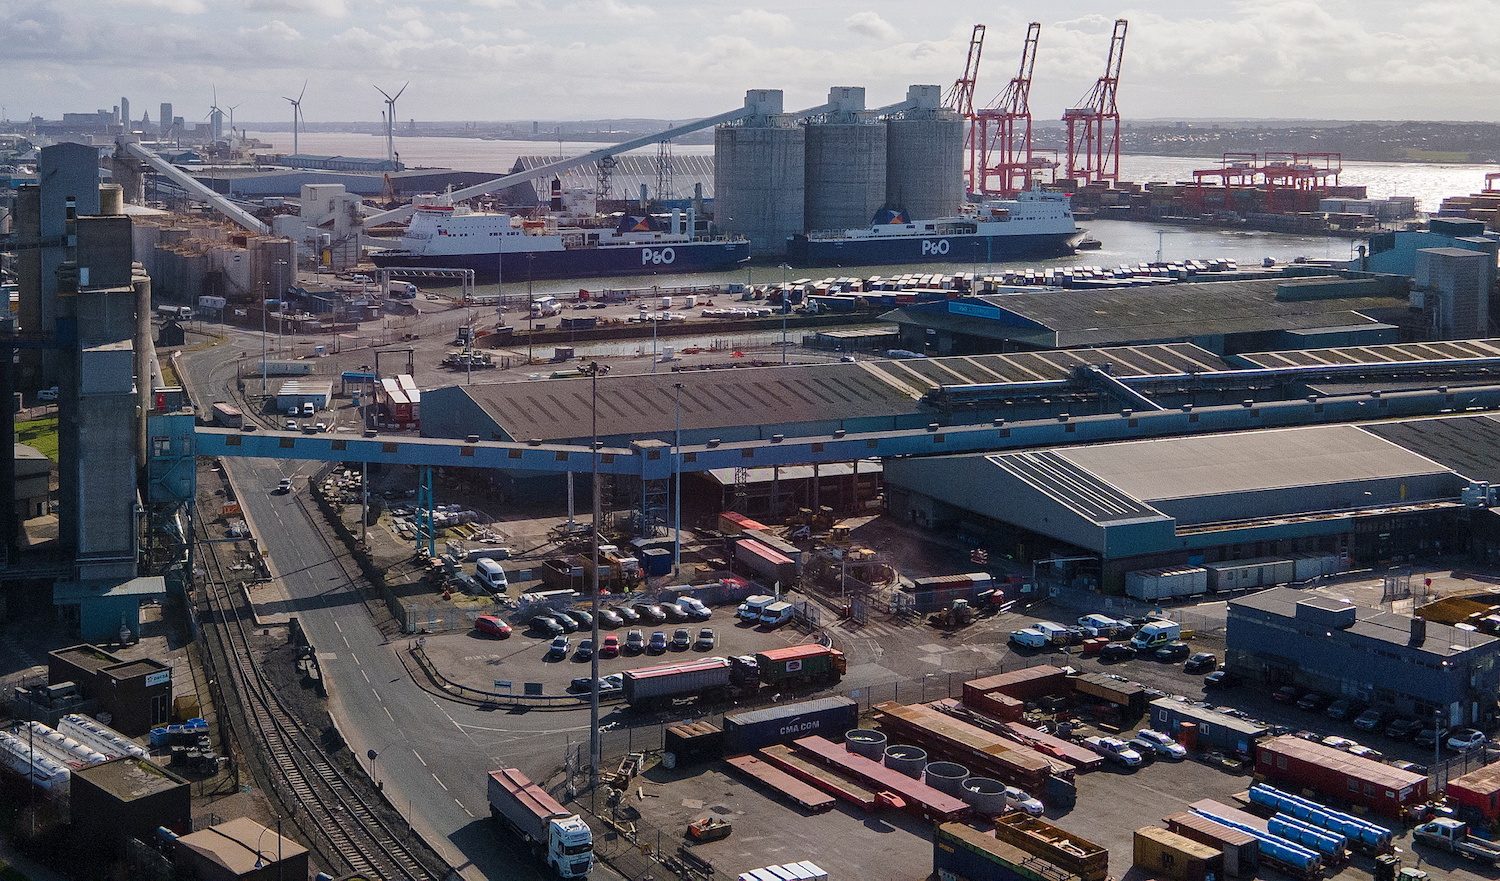 UK’s P&O Ferries sacks 800 staff, threatening union standoff